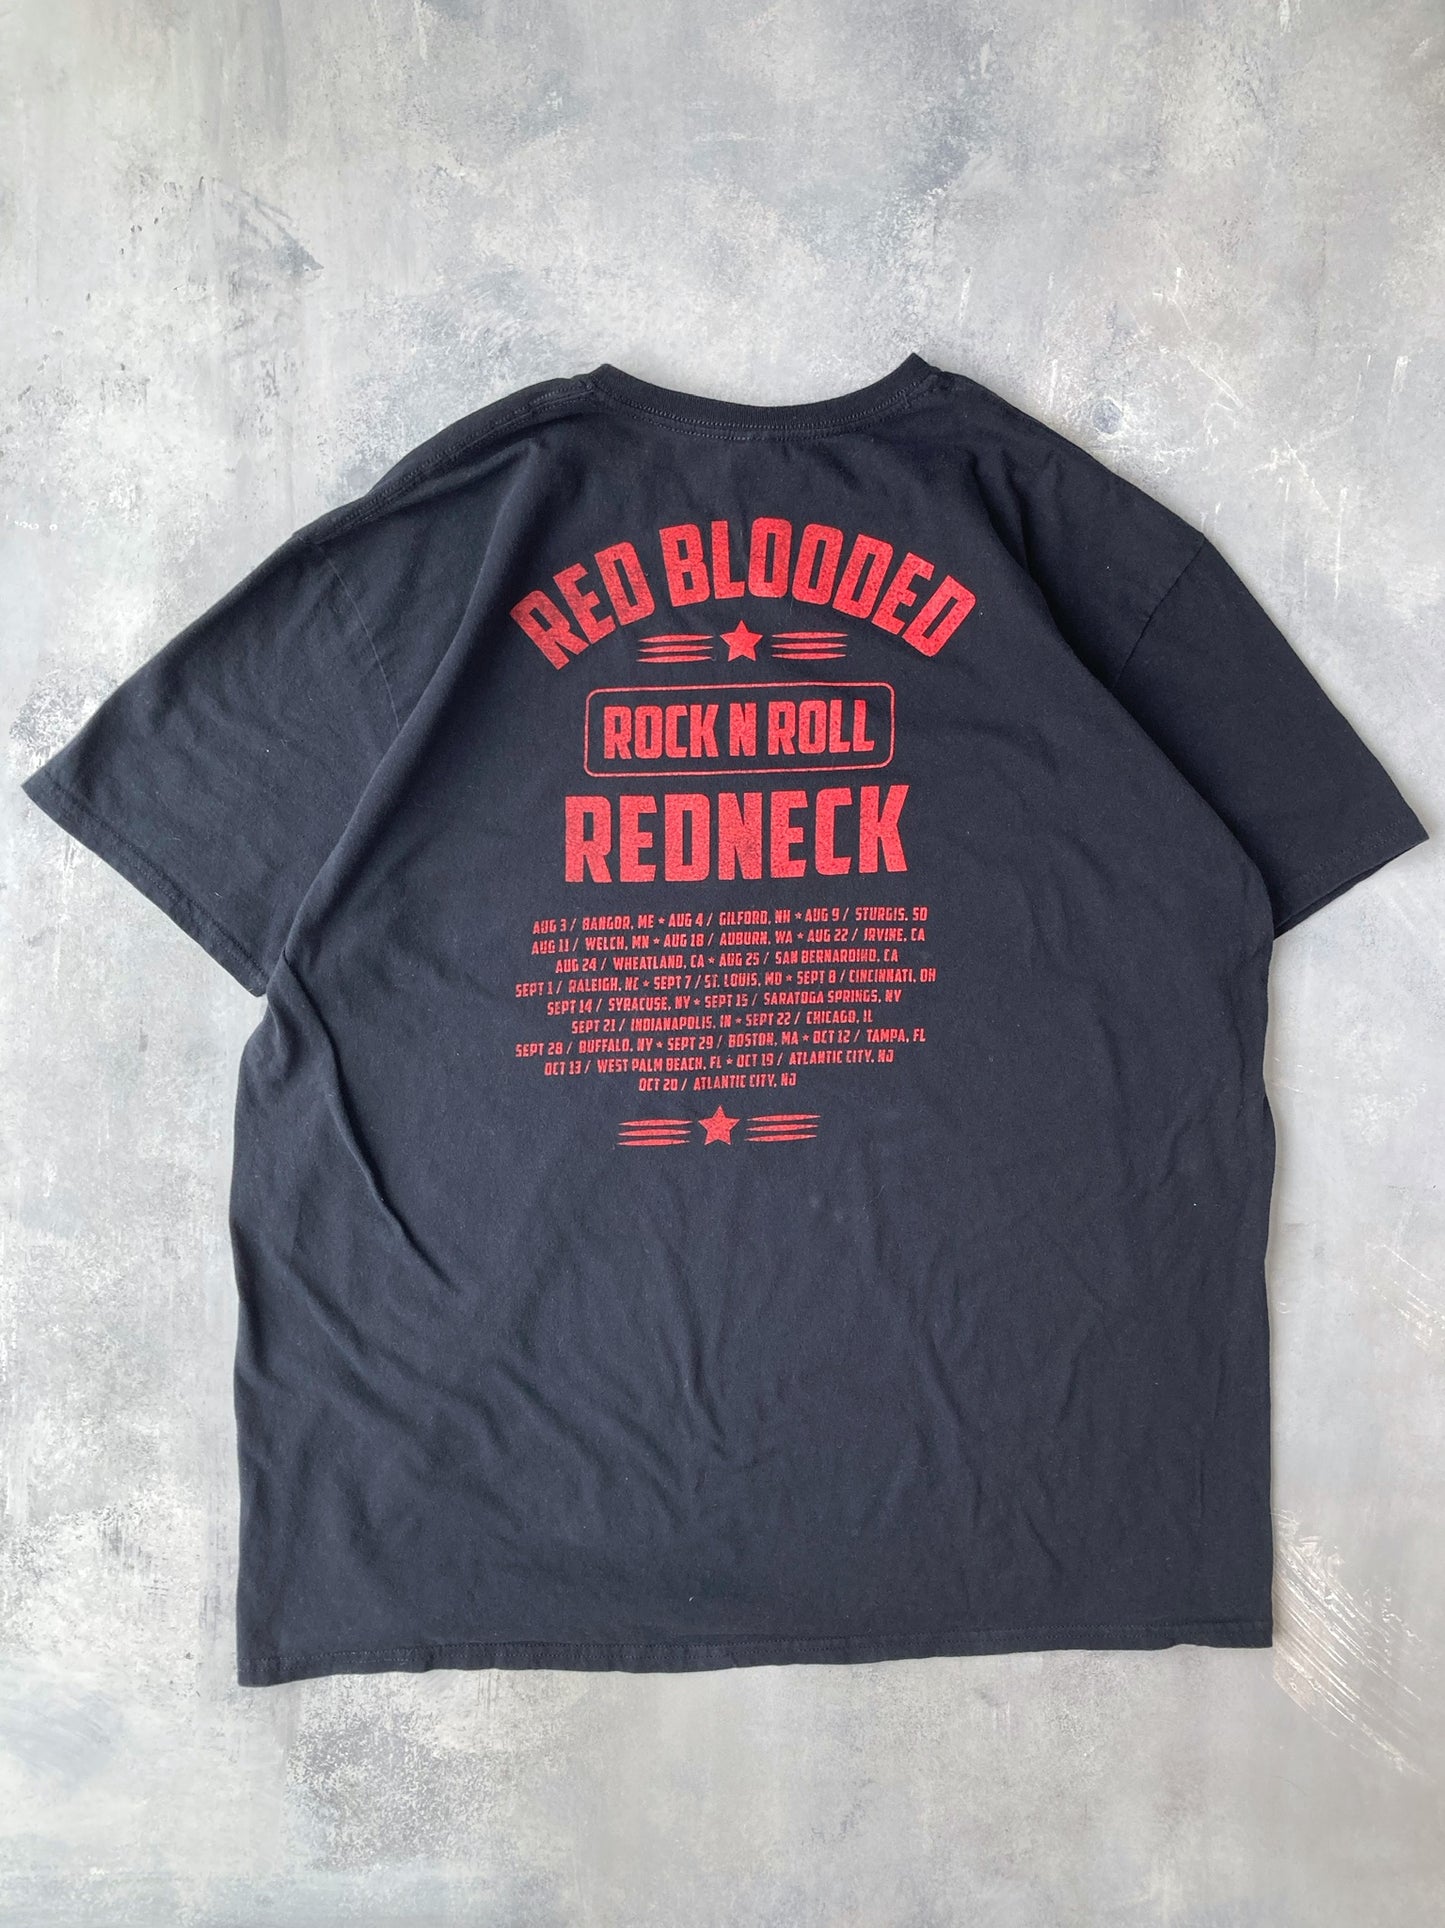 Kid Rock Tour T-Shirt '08 - XXL